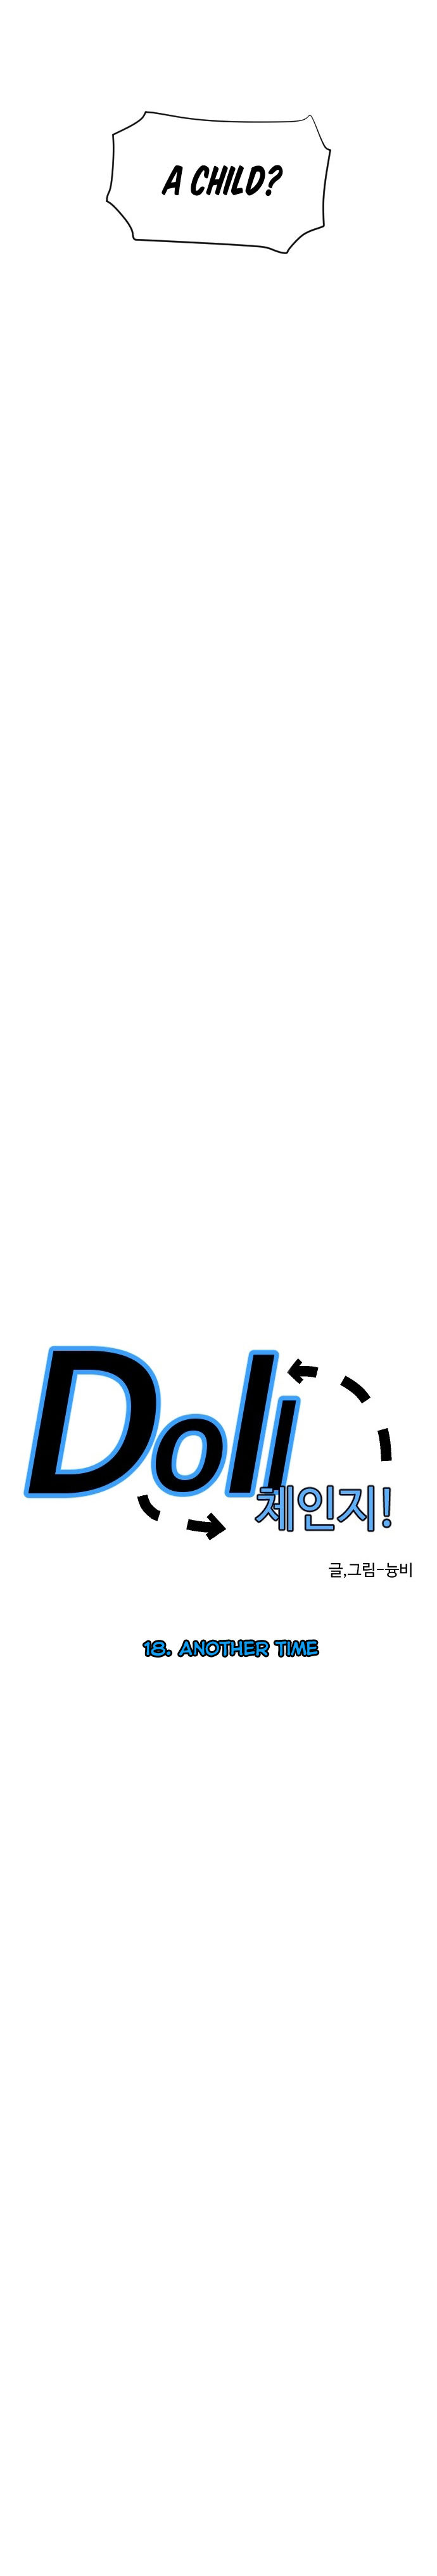 Doll Change 18